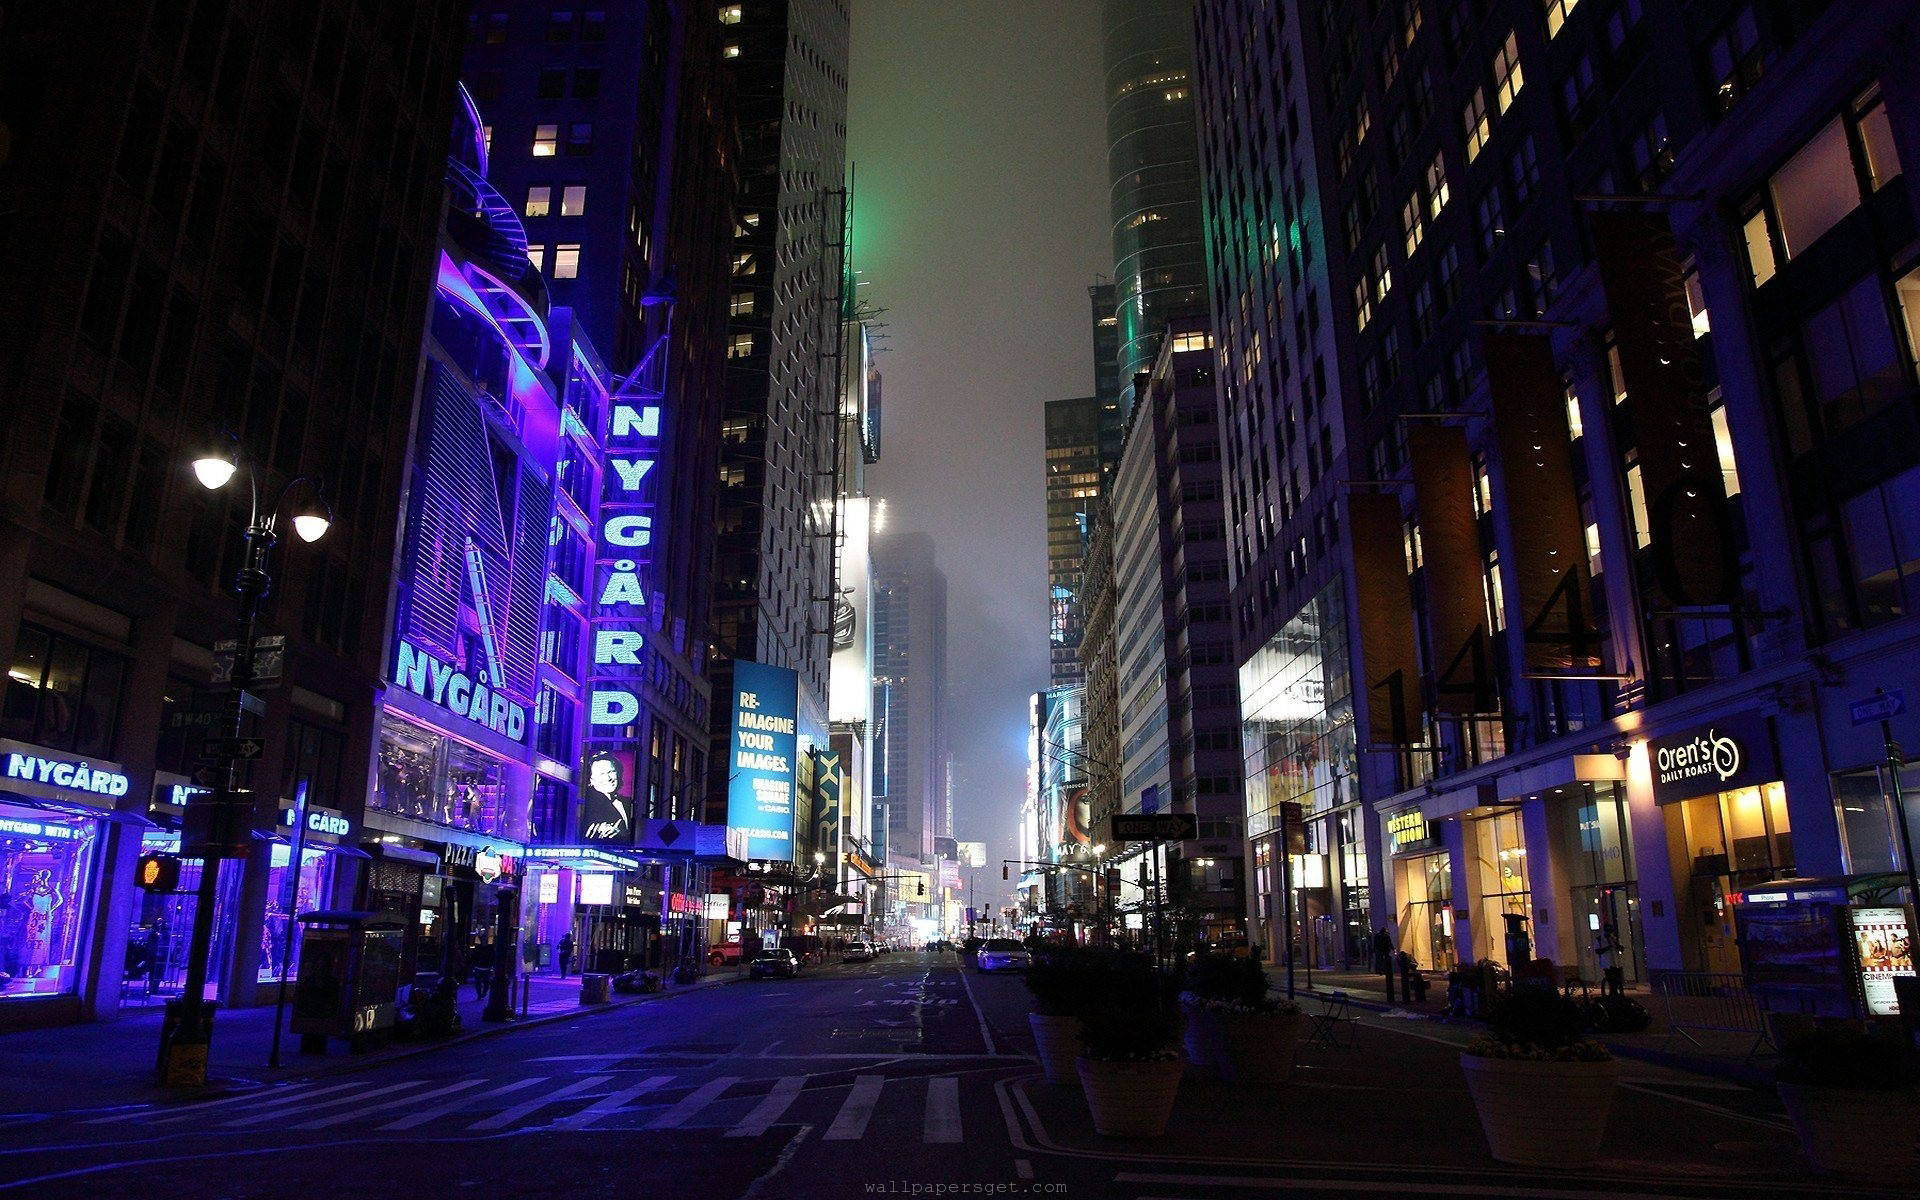 "Mesmerizing Night View of Nygard Building, New York City" Wallpaper